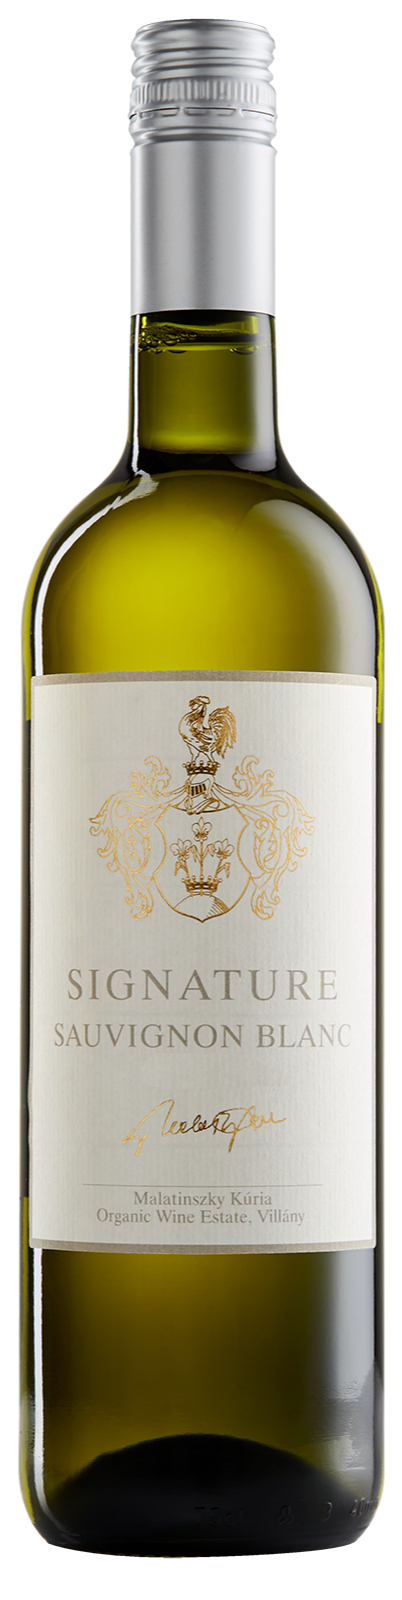 Signature Savignon Blanc, Bor - Malatinszky Kúria Organic Wine Estate